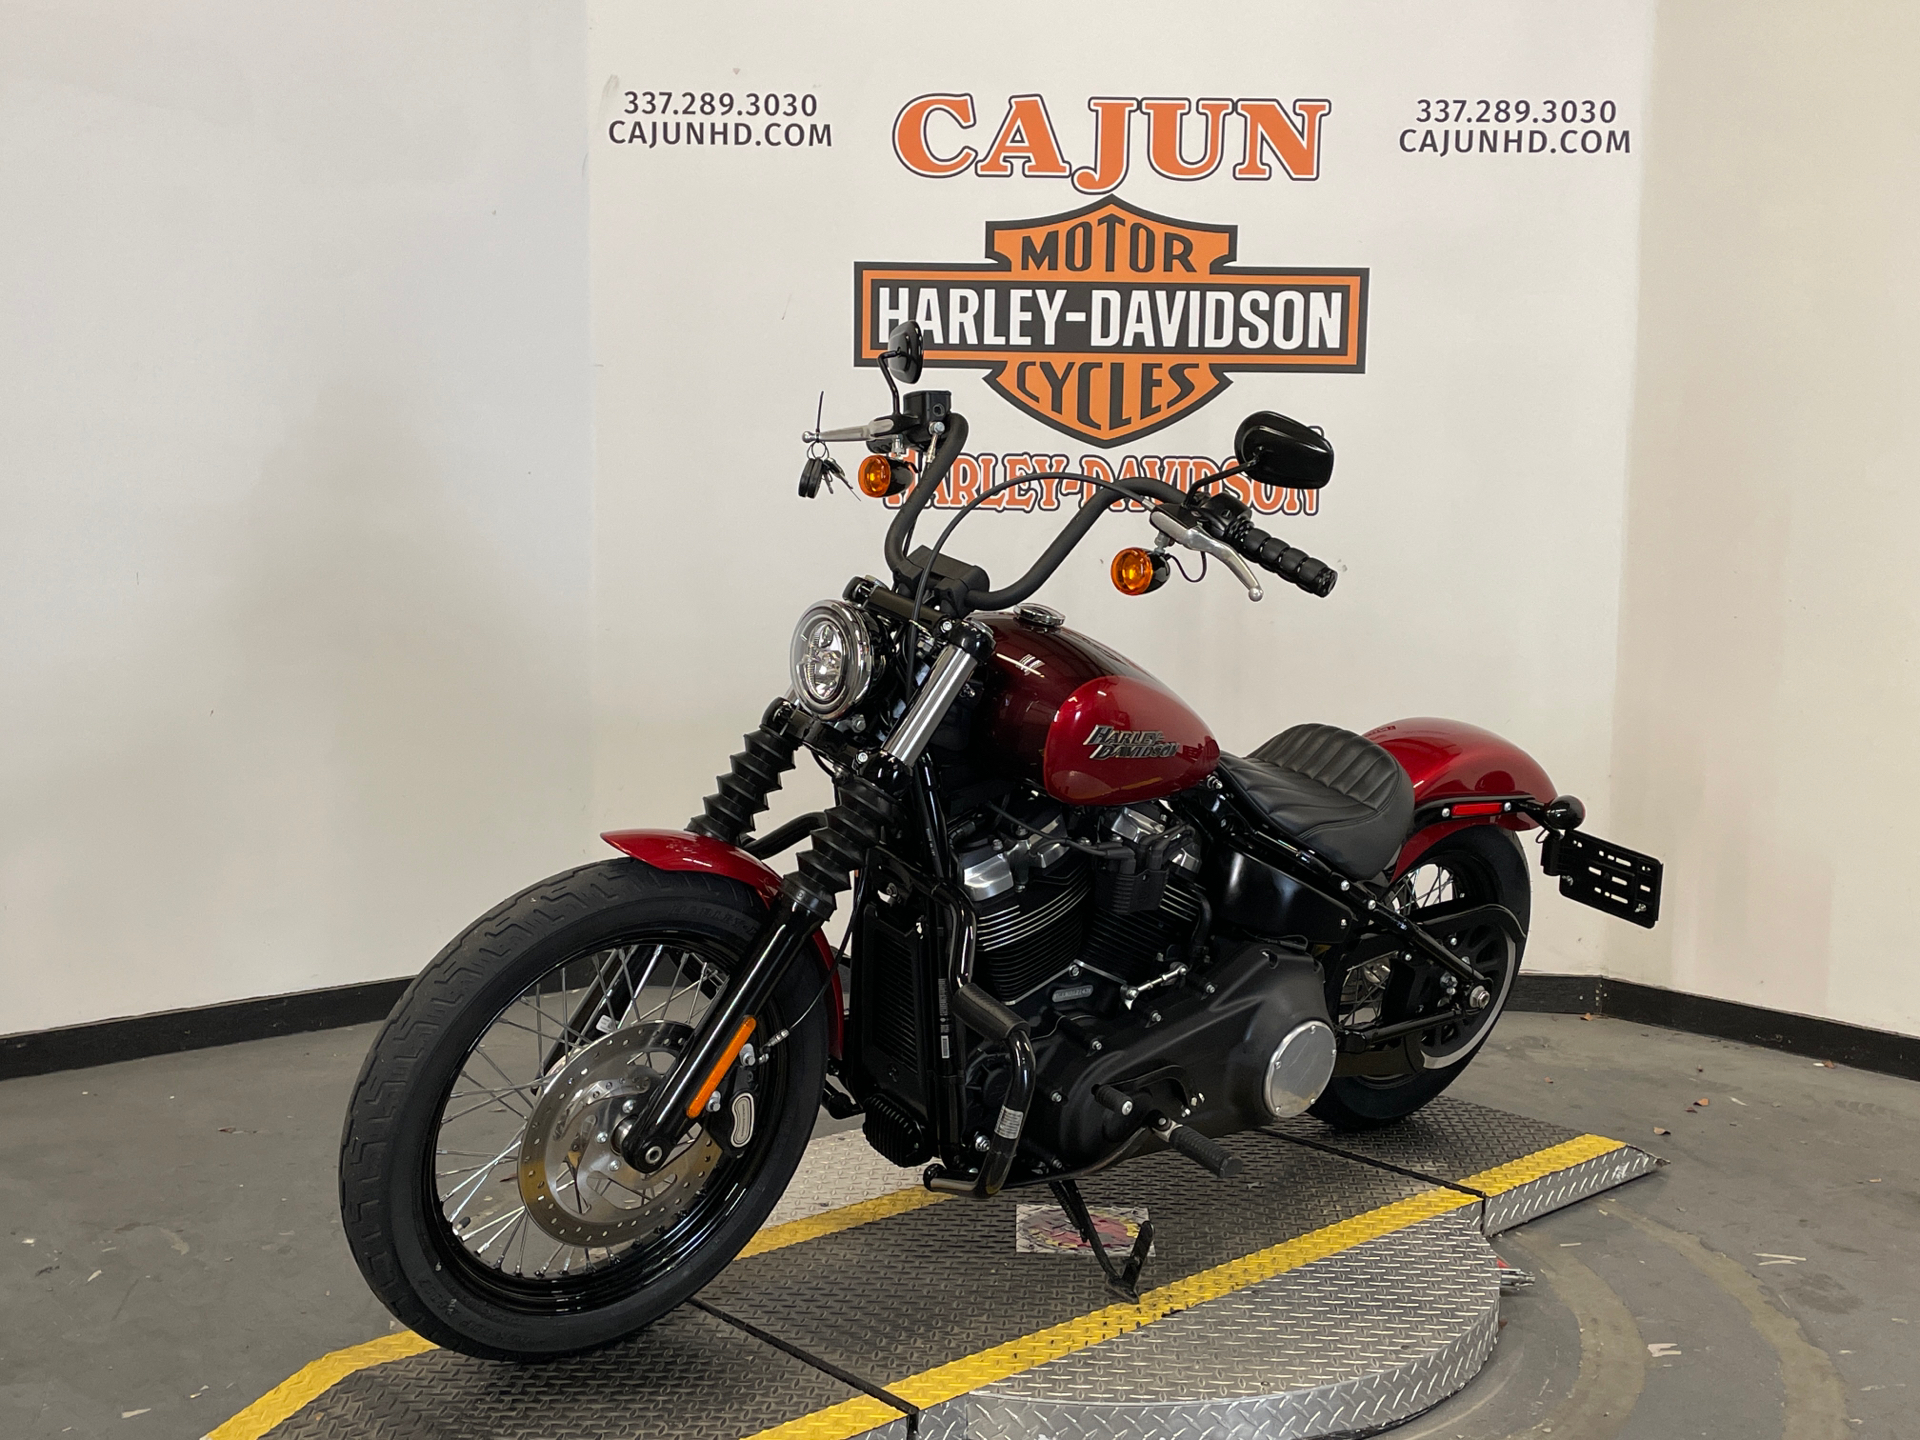 2019 Harley-Davidson Street Bob near me - Photo 5